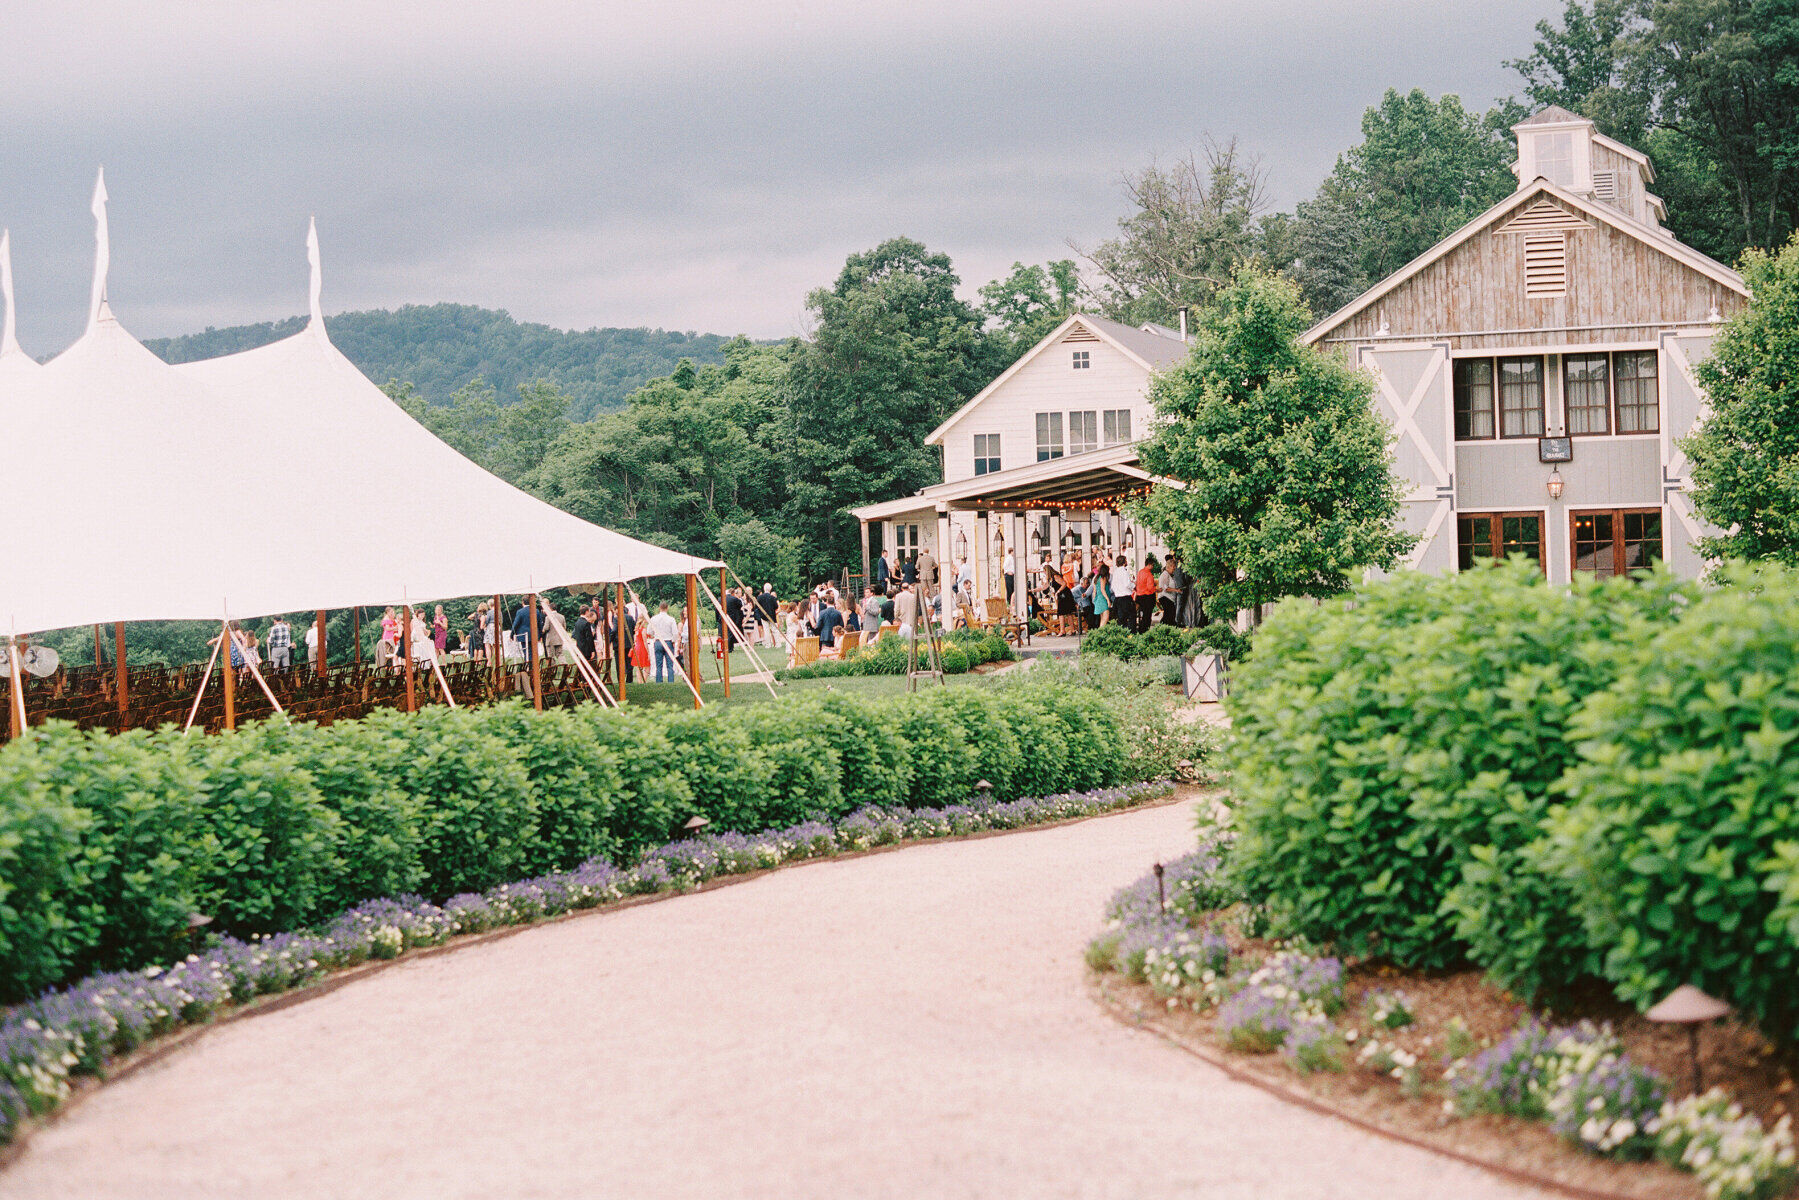 Explore Wedding Venue, Pippin Hill Farm & Vineyards